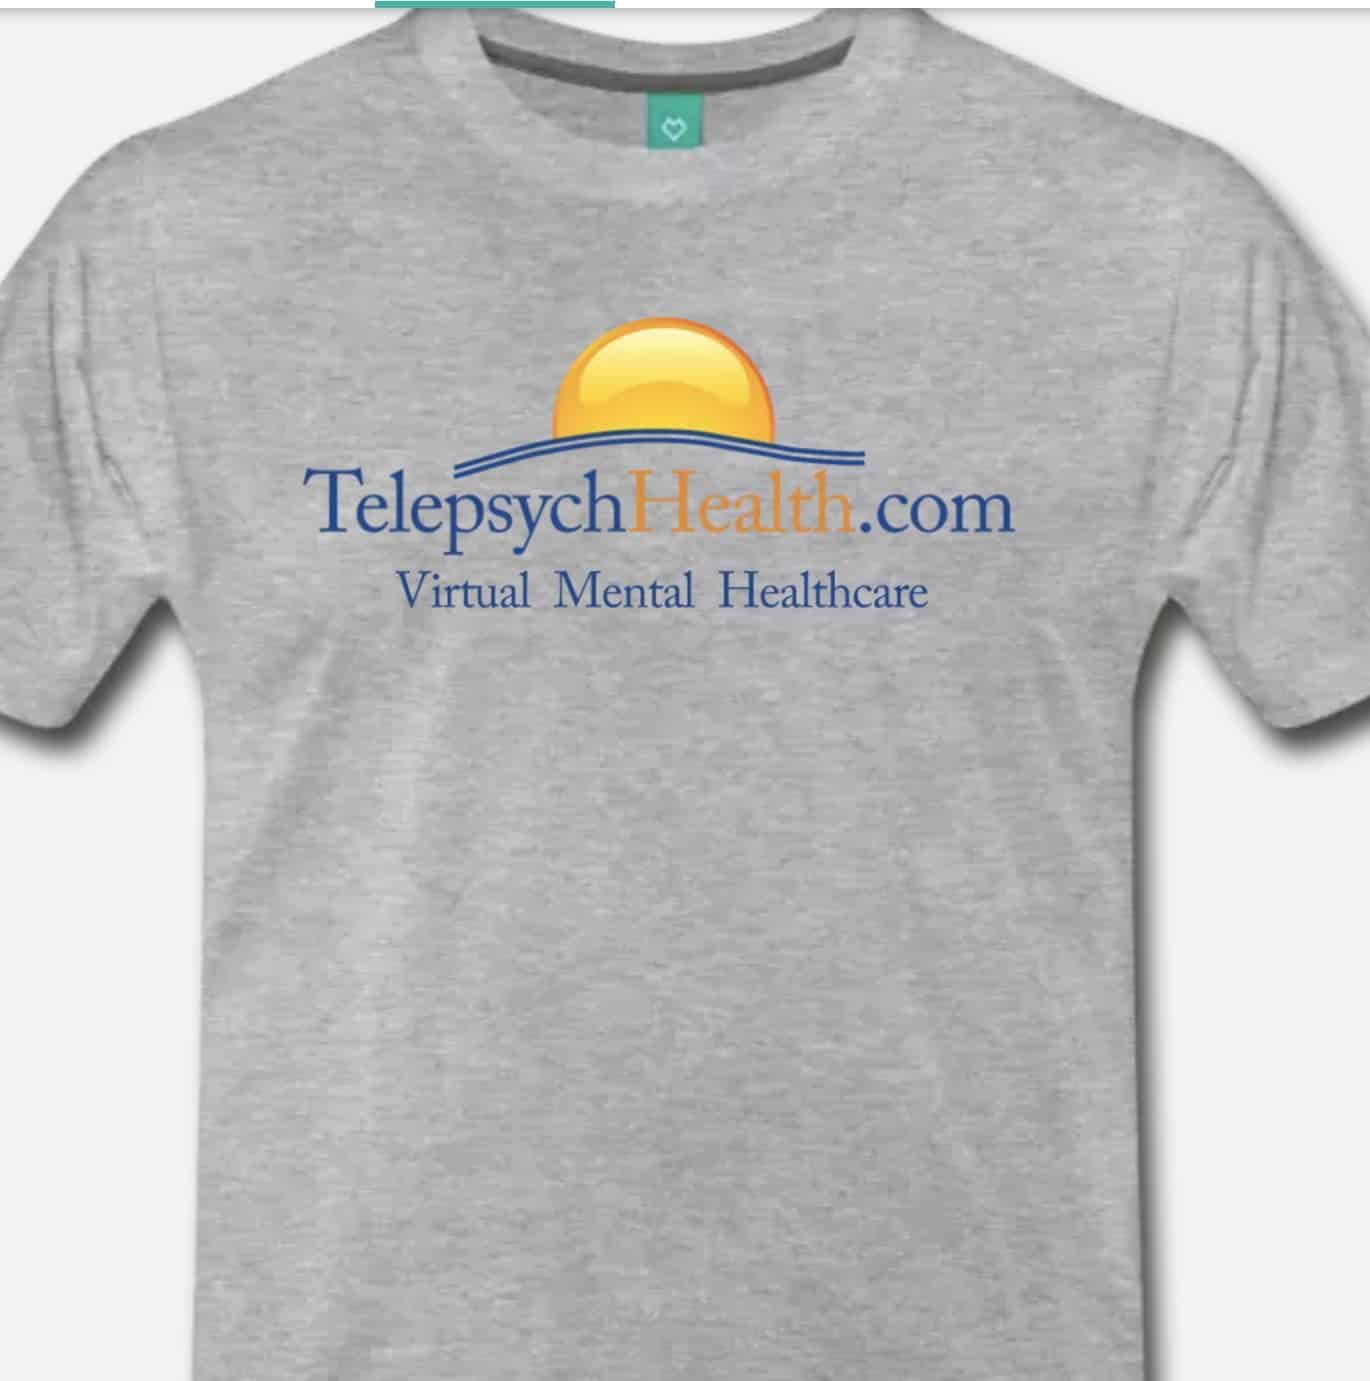 New TelepsychHealth T-Shirts